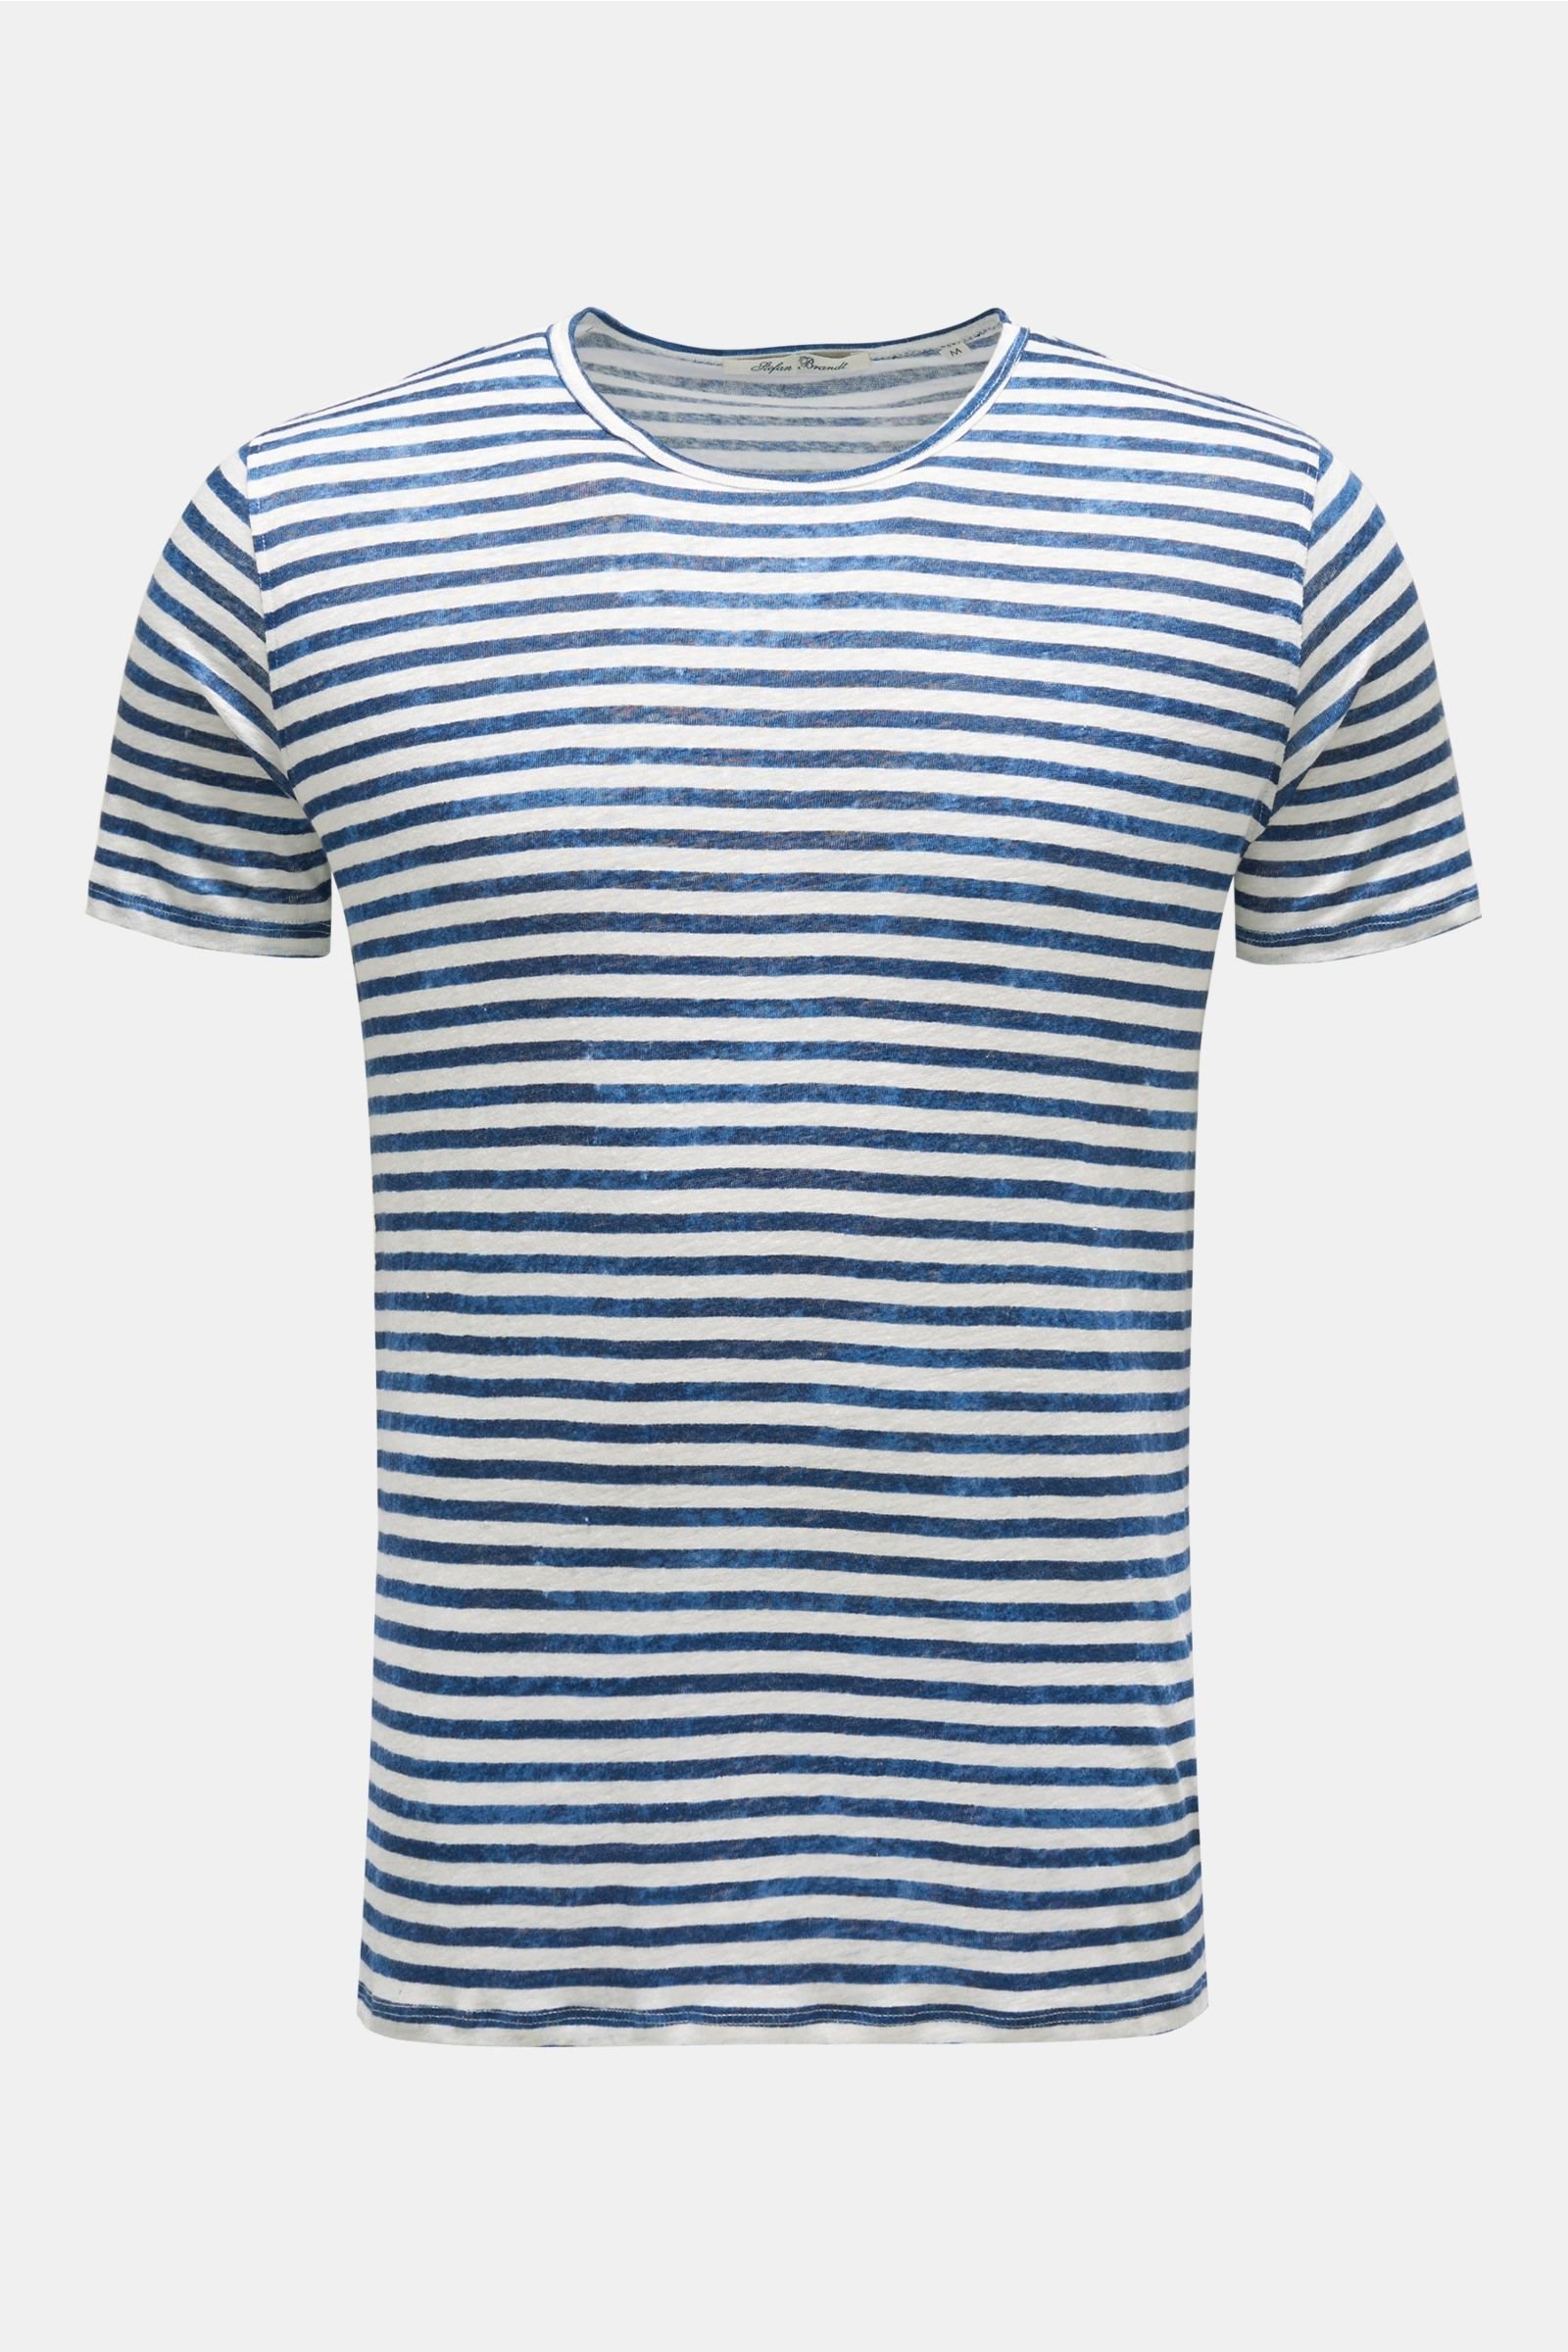 Linen crew neck T-shirt navy/white striped